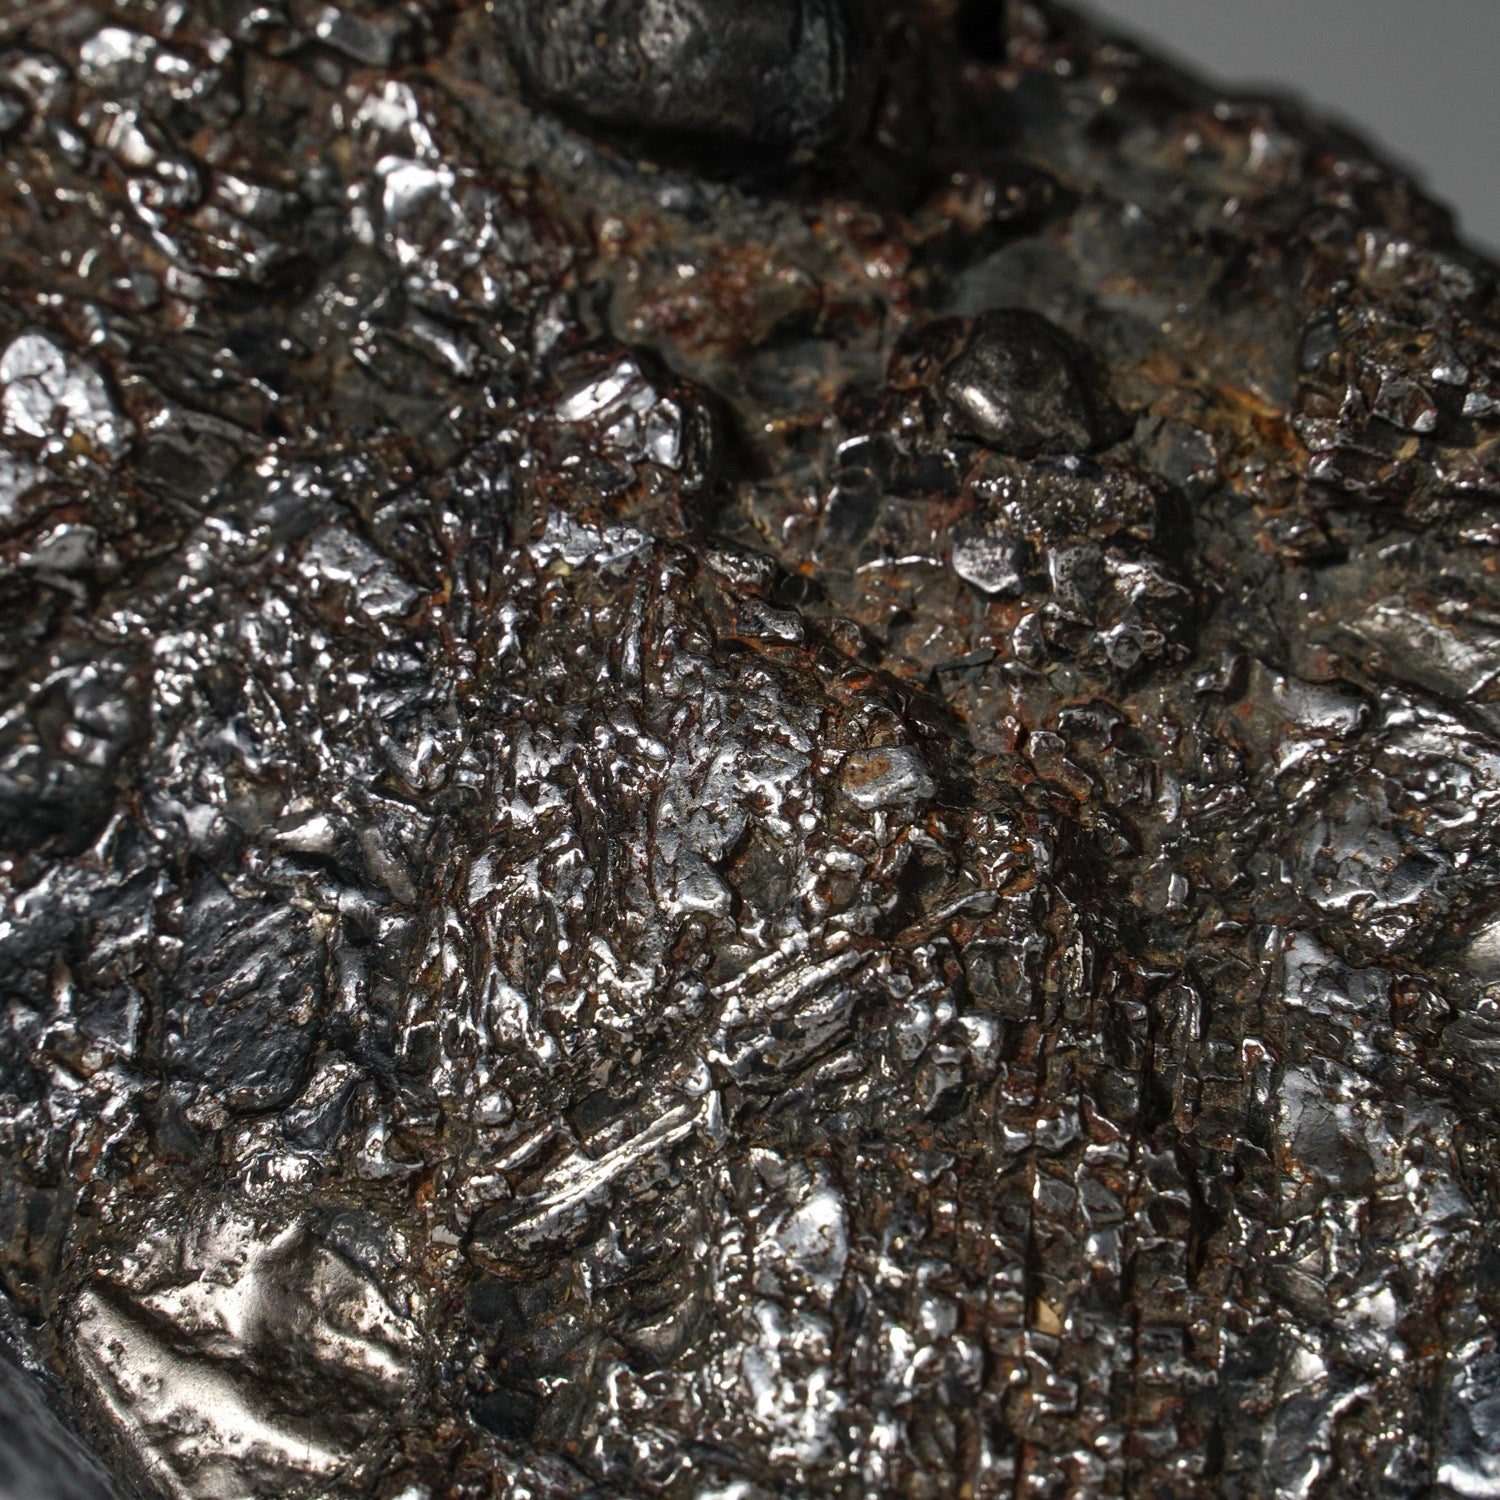 Genuine Natural Sikhote-Alin Meteorite from Russia (5 lbs)